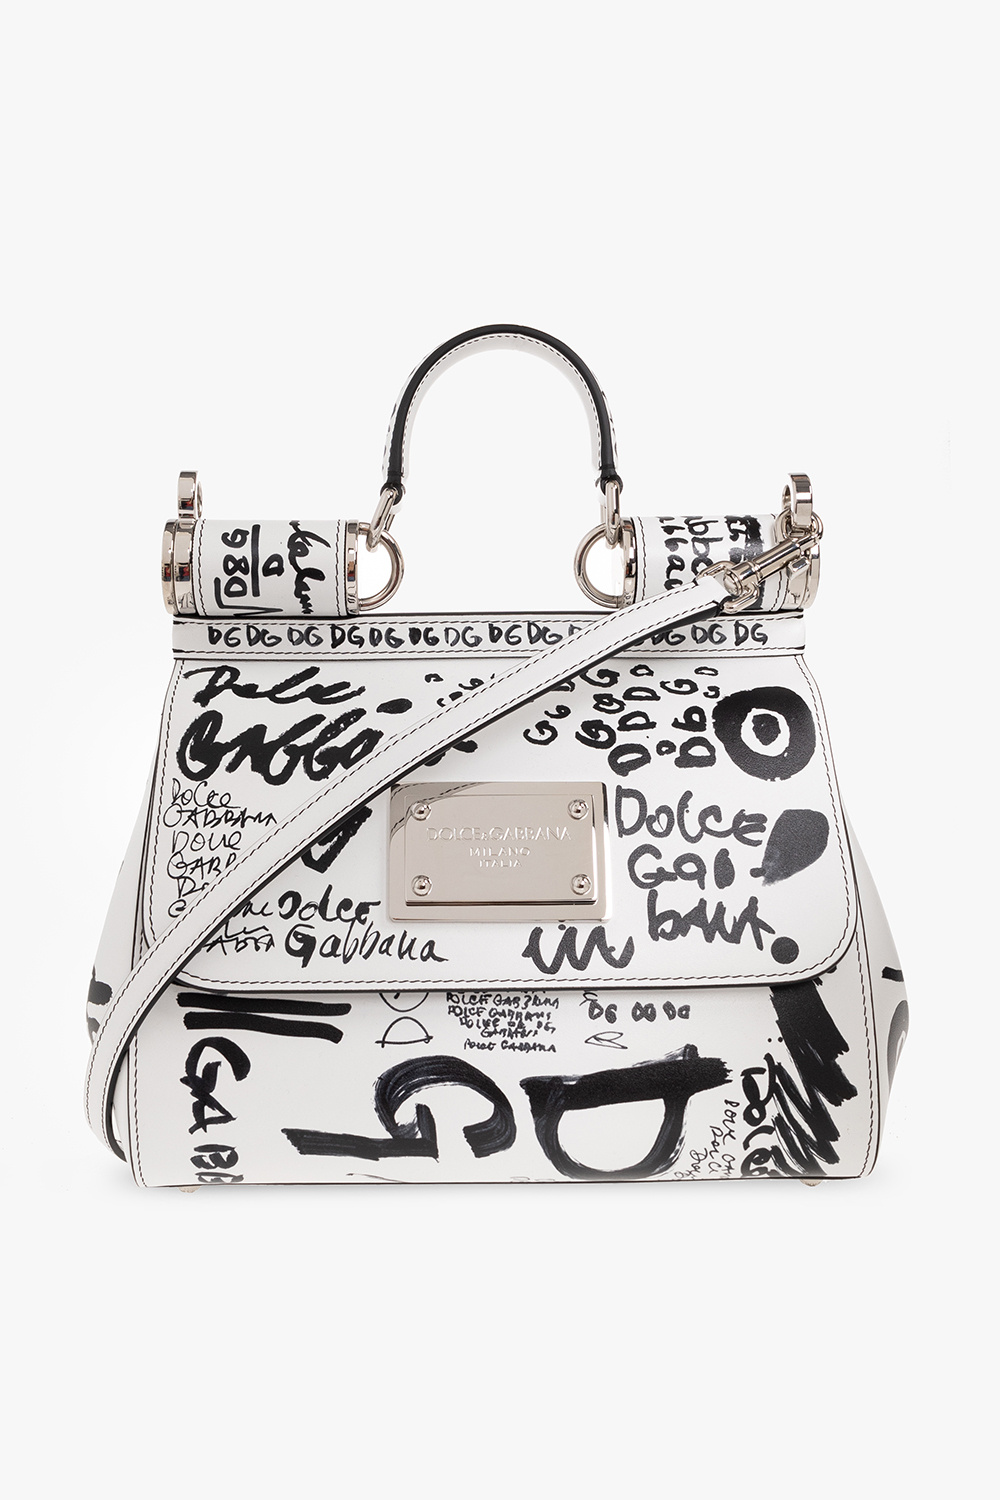 Dolce & Gabbana 'Sicily Small' shoulder bag, Women's Bags